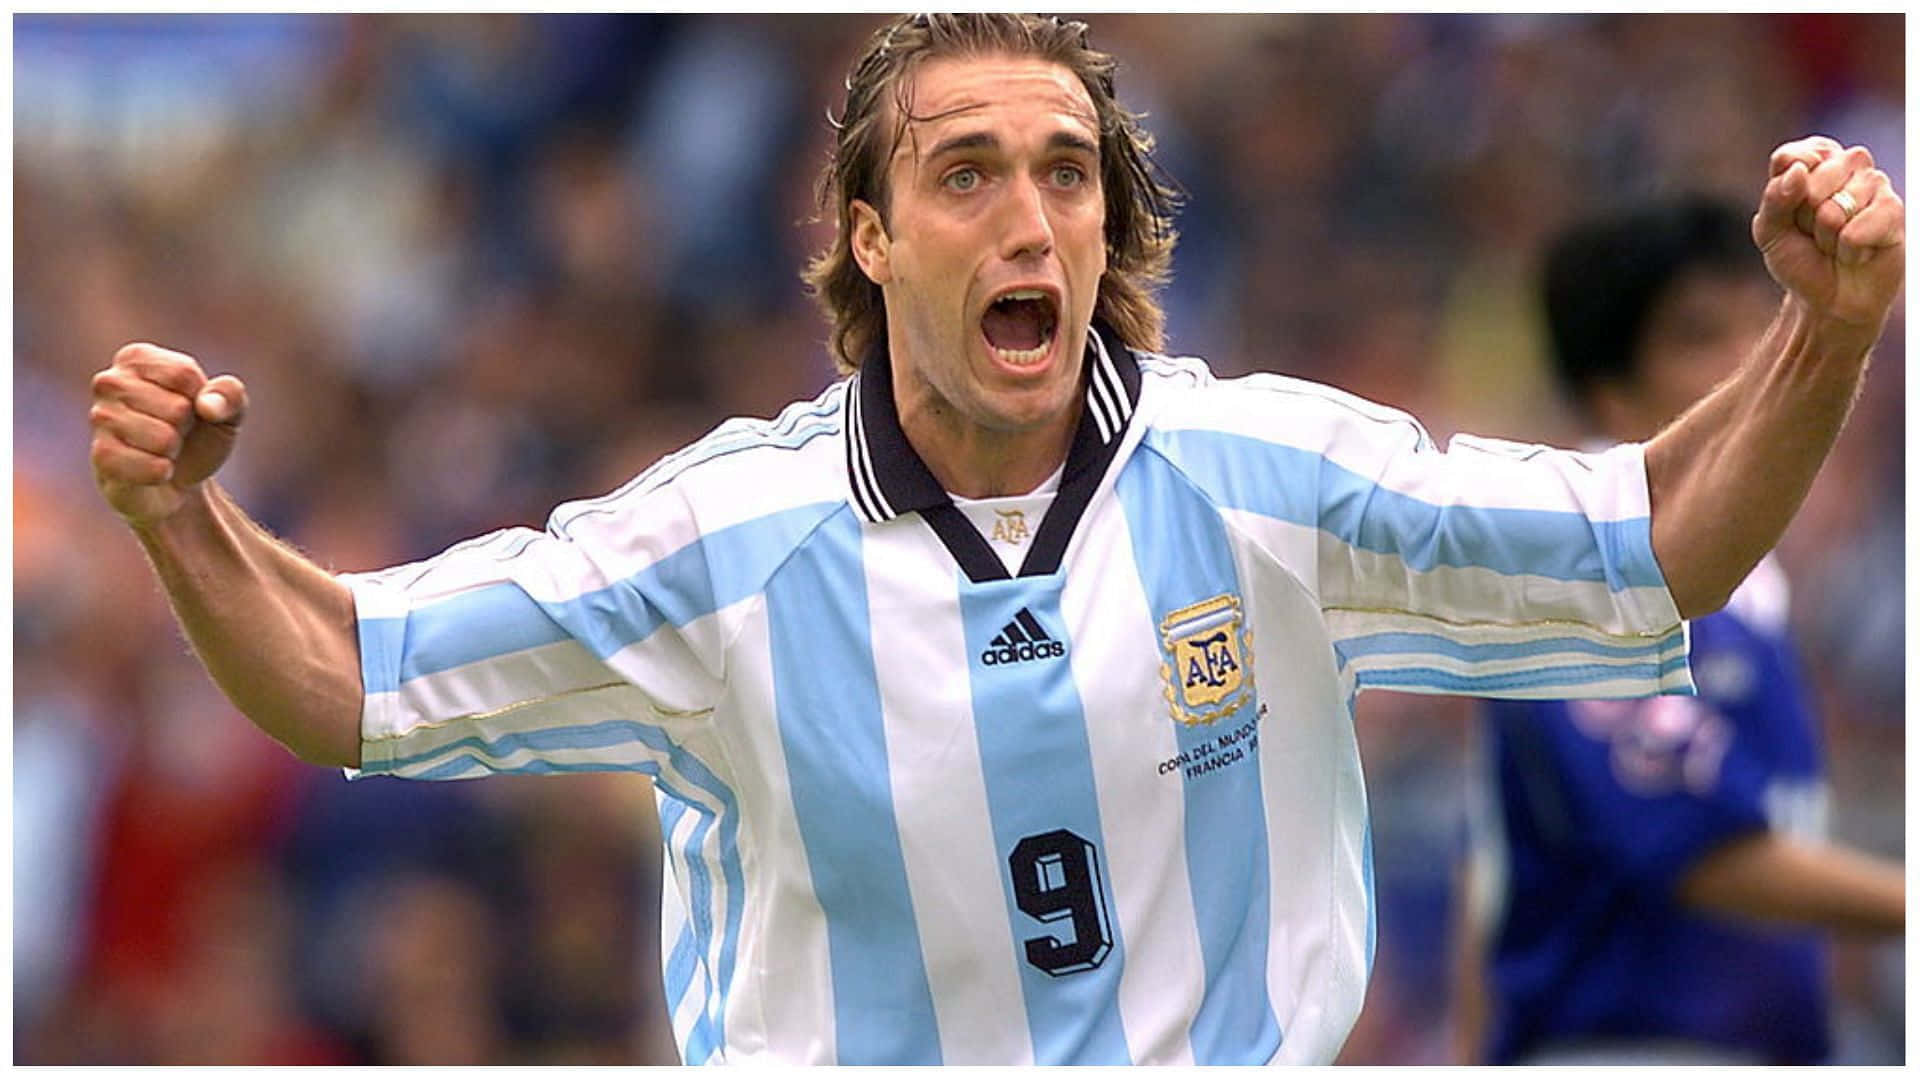 Gabrielbatistuta, Argentinischer Fußballspieler, Feiert Wallpaper